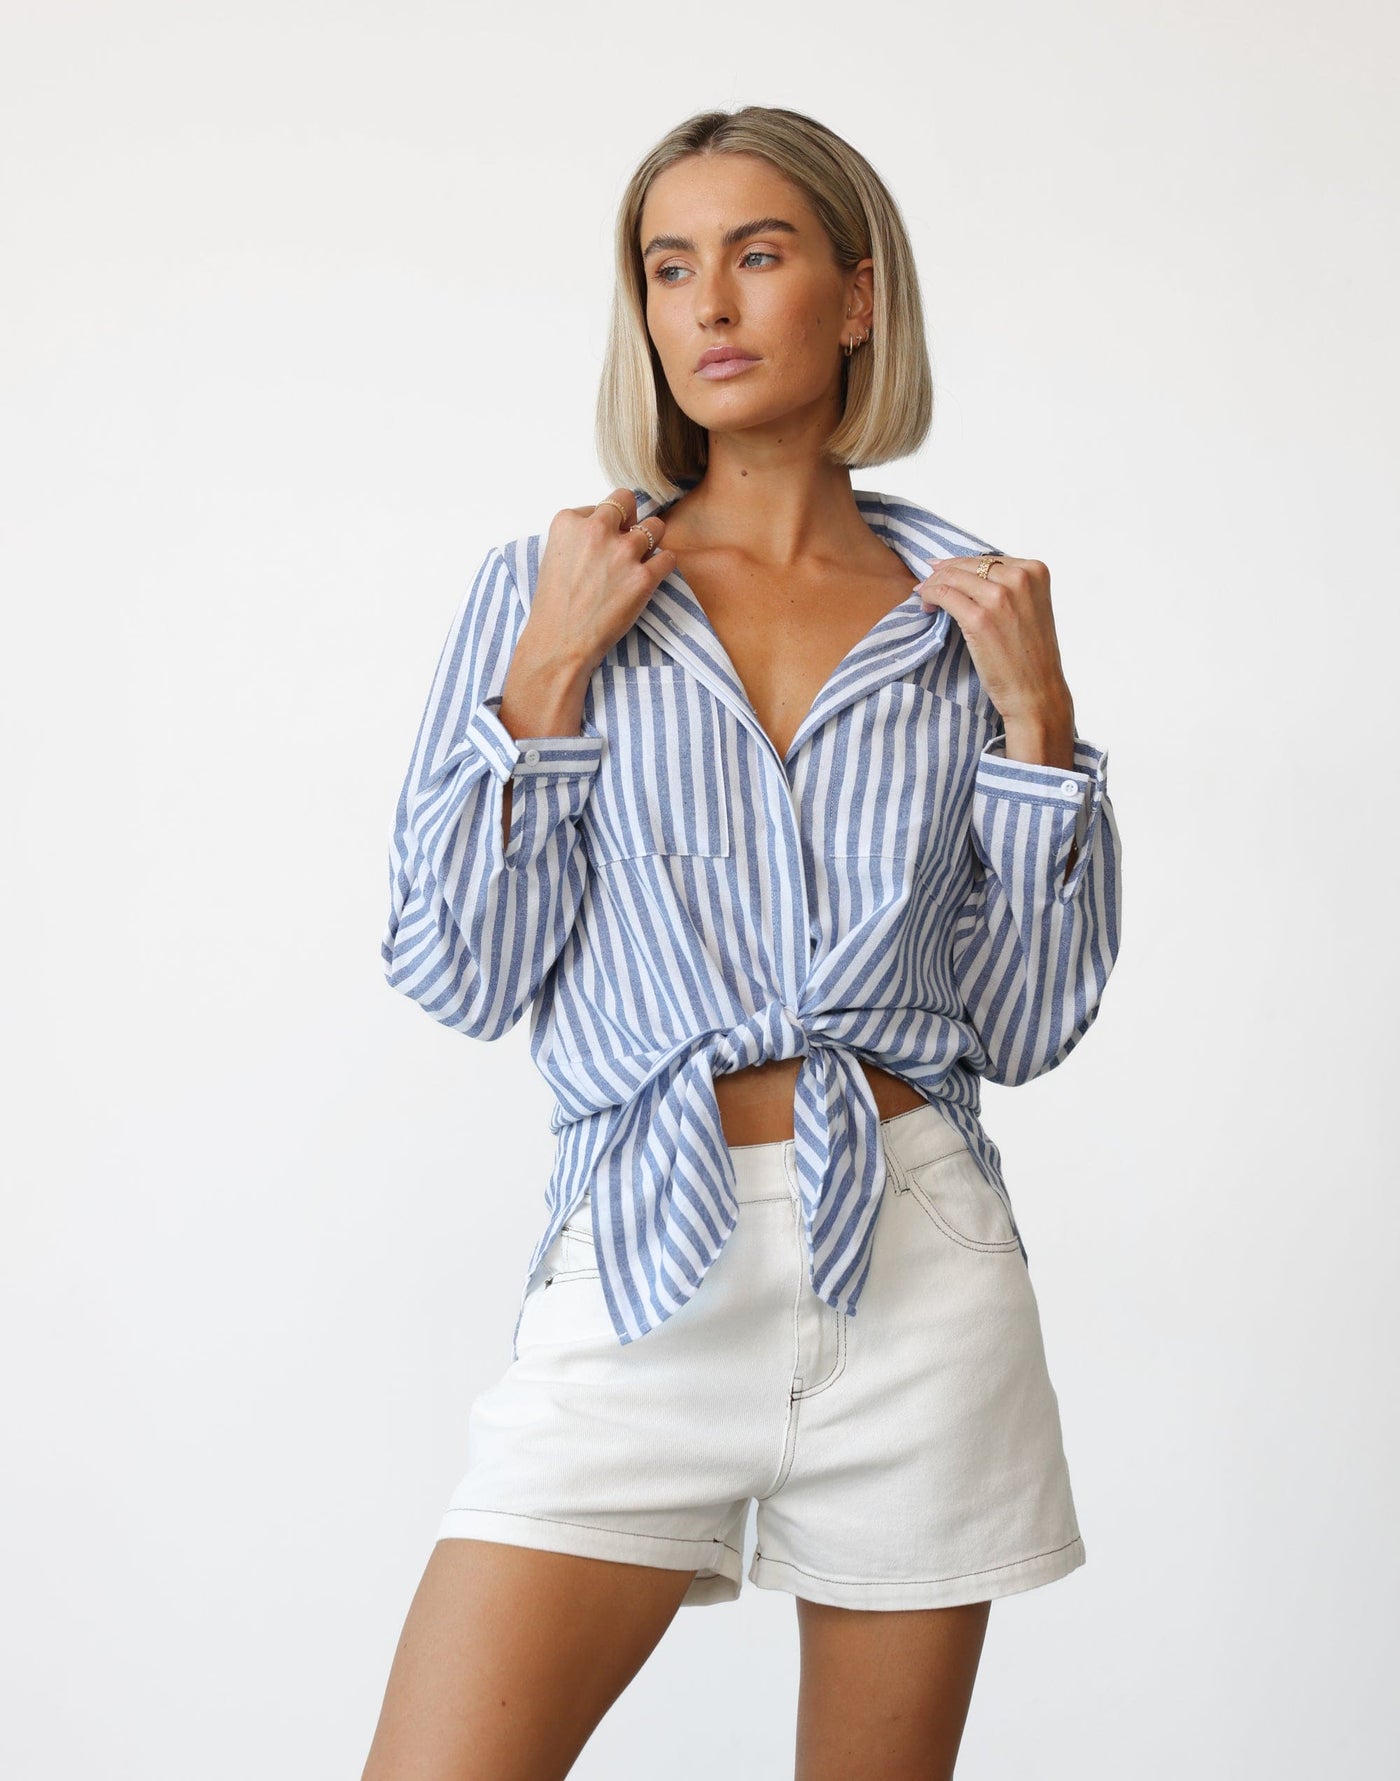 Ivani Shirt (Blue Stripe) - Blue/White Stripe Oversized Rounded Hem Side Split Shirt - Women's Top - Charcoal Clothing